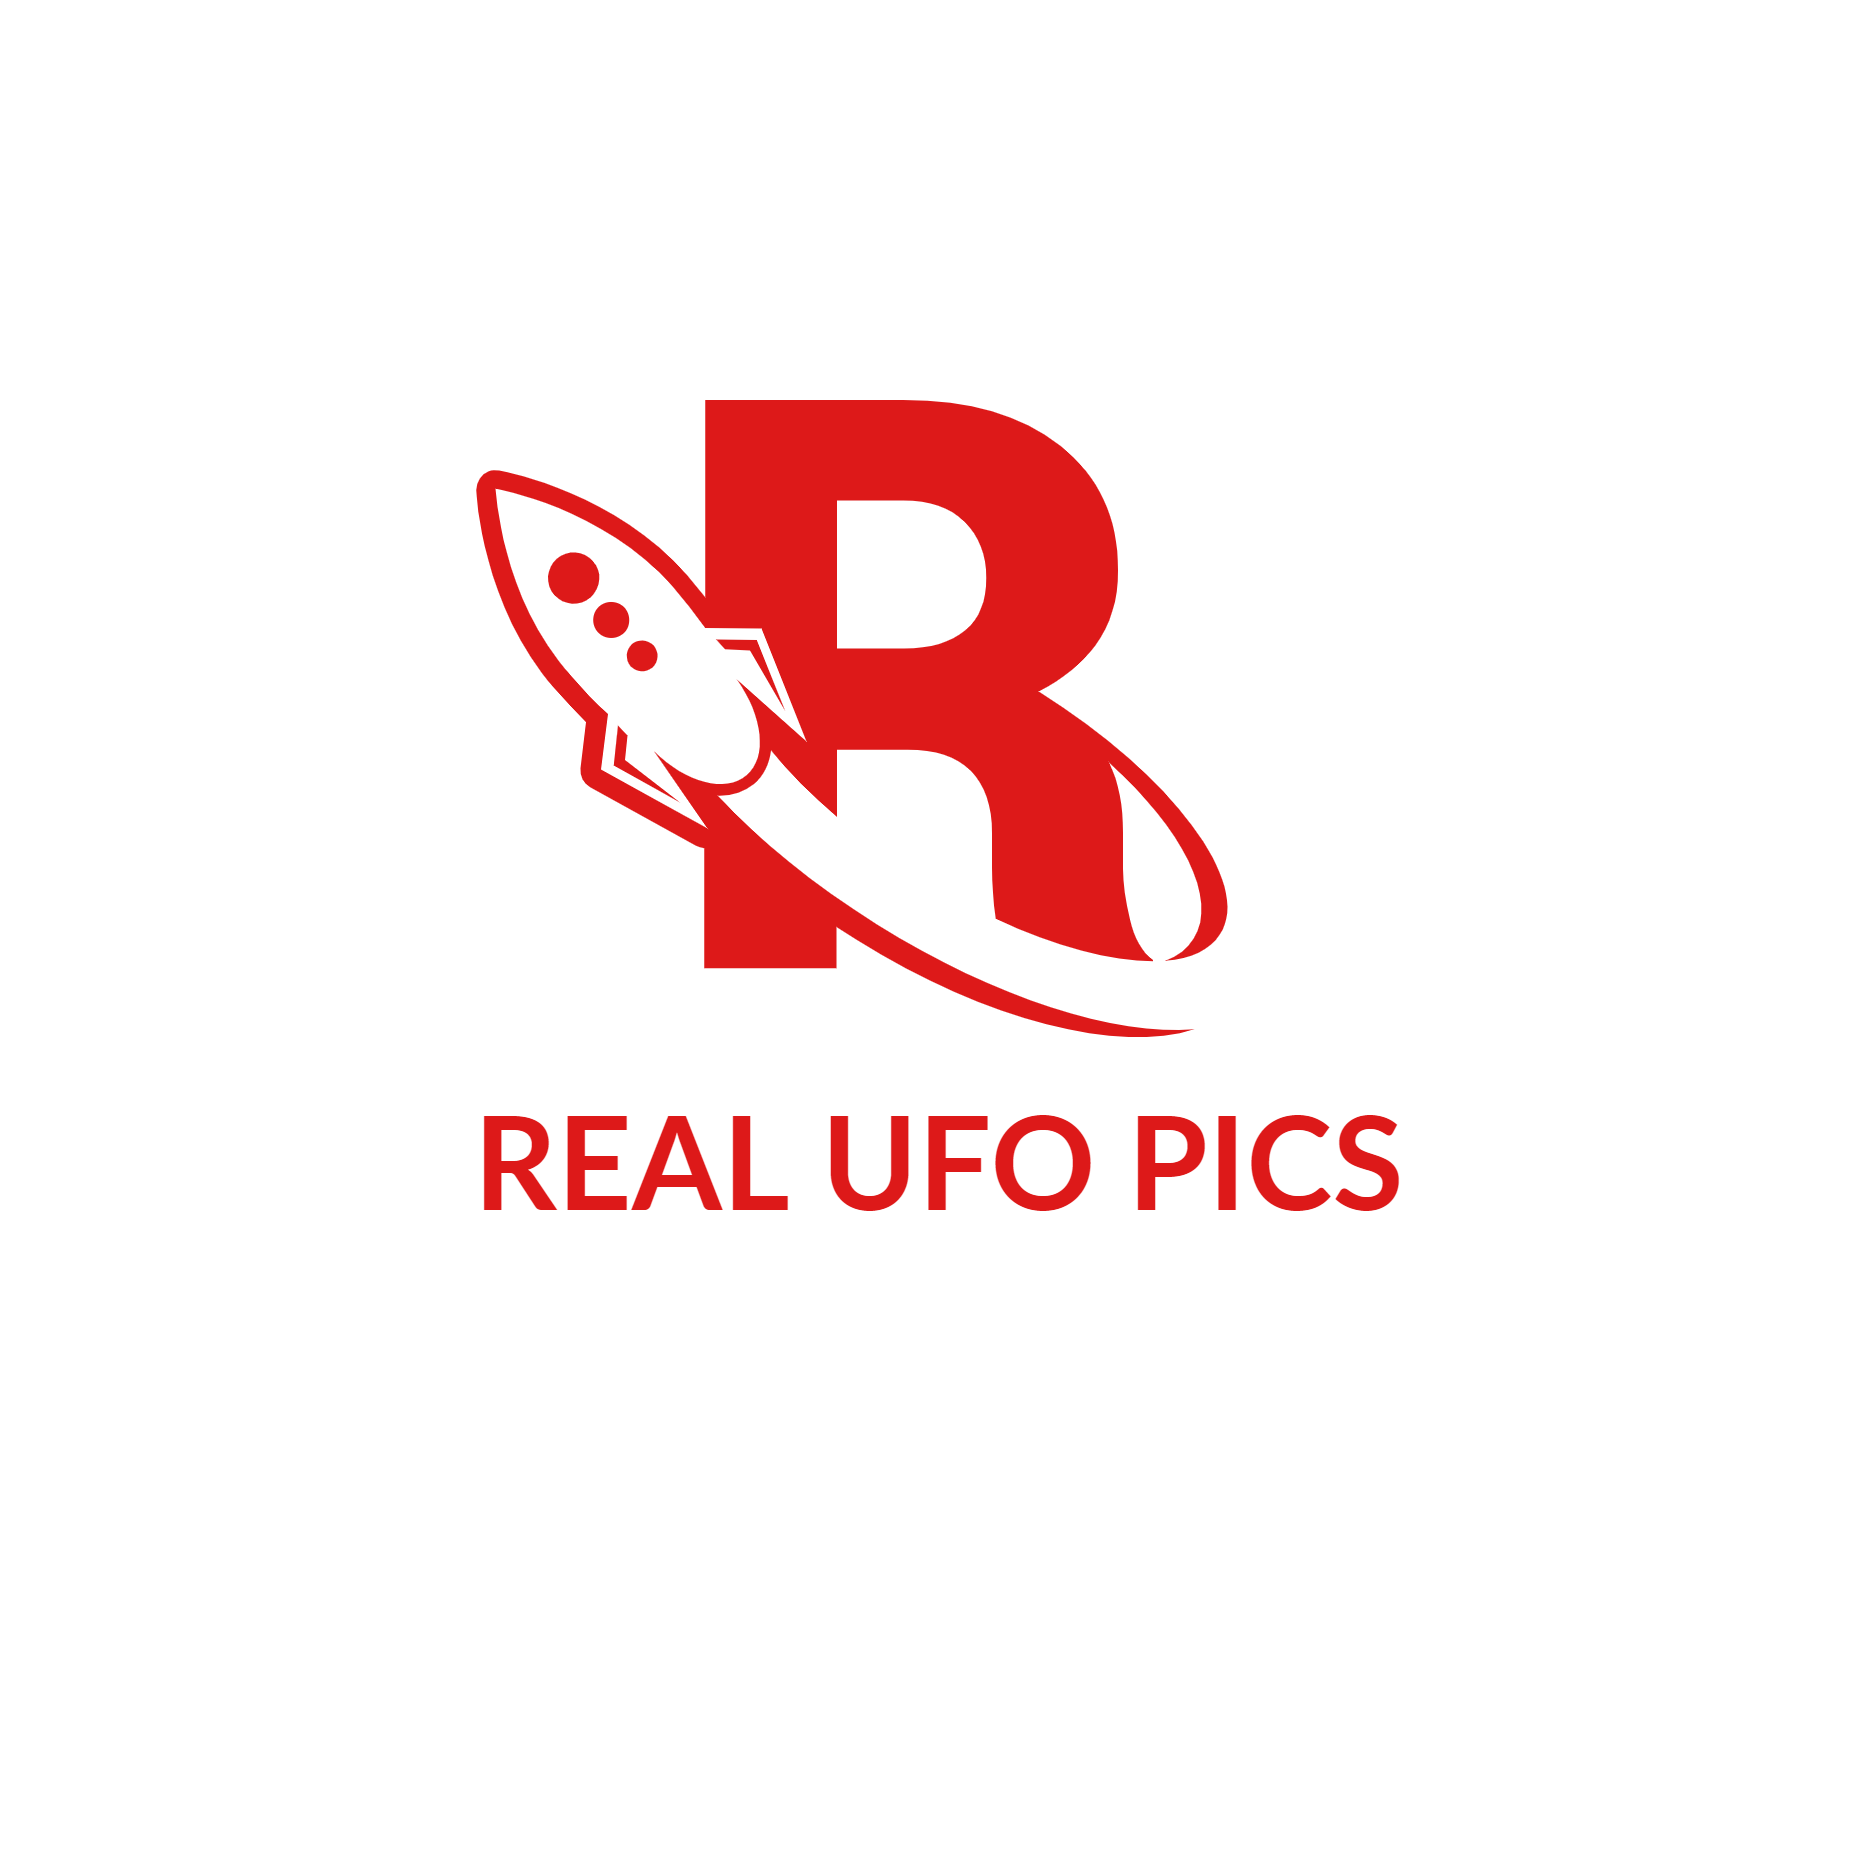 Real UFO Pics